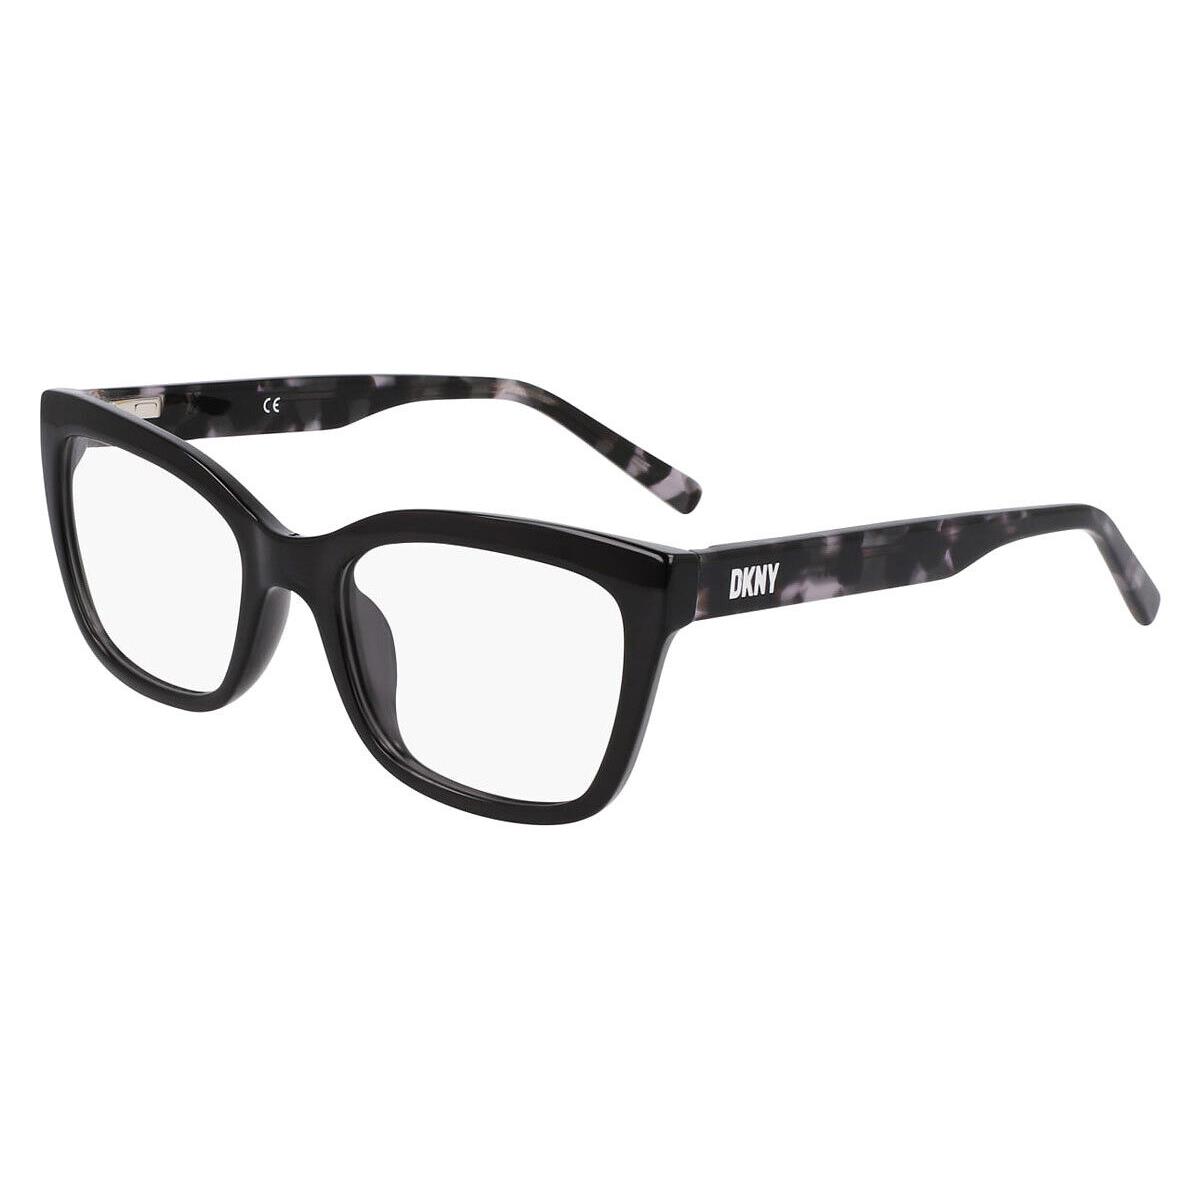 Dkny DK5068 Eyeglasses Women Black Crystal 52mm